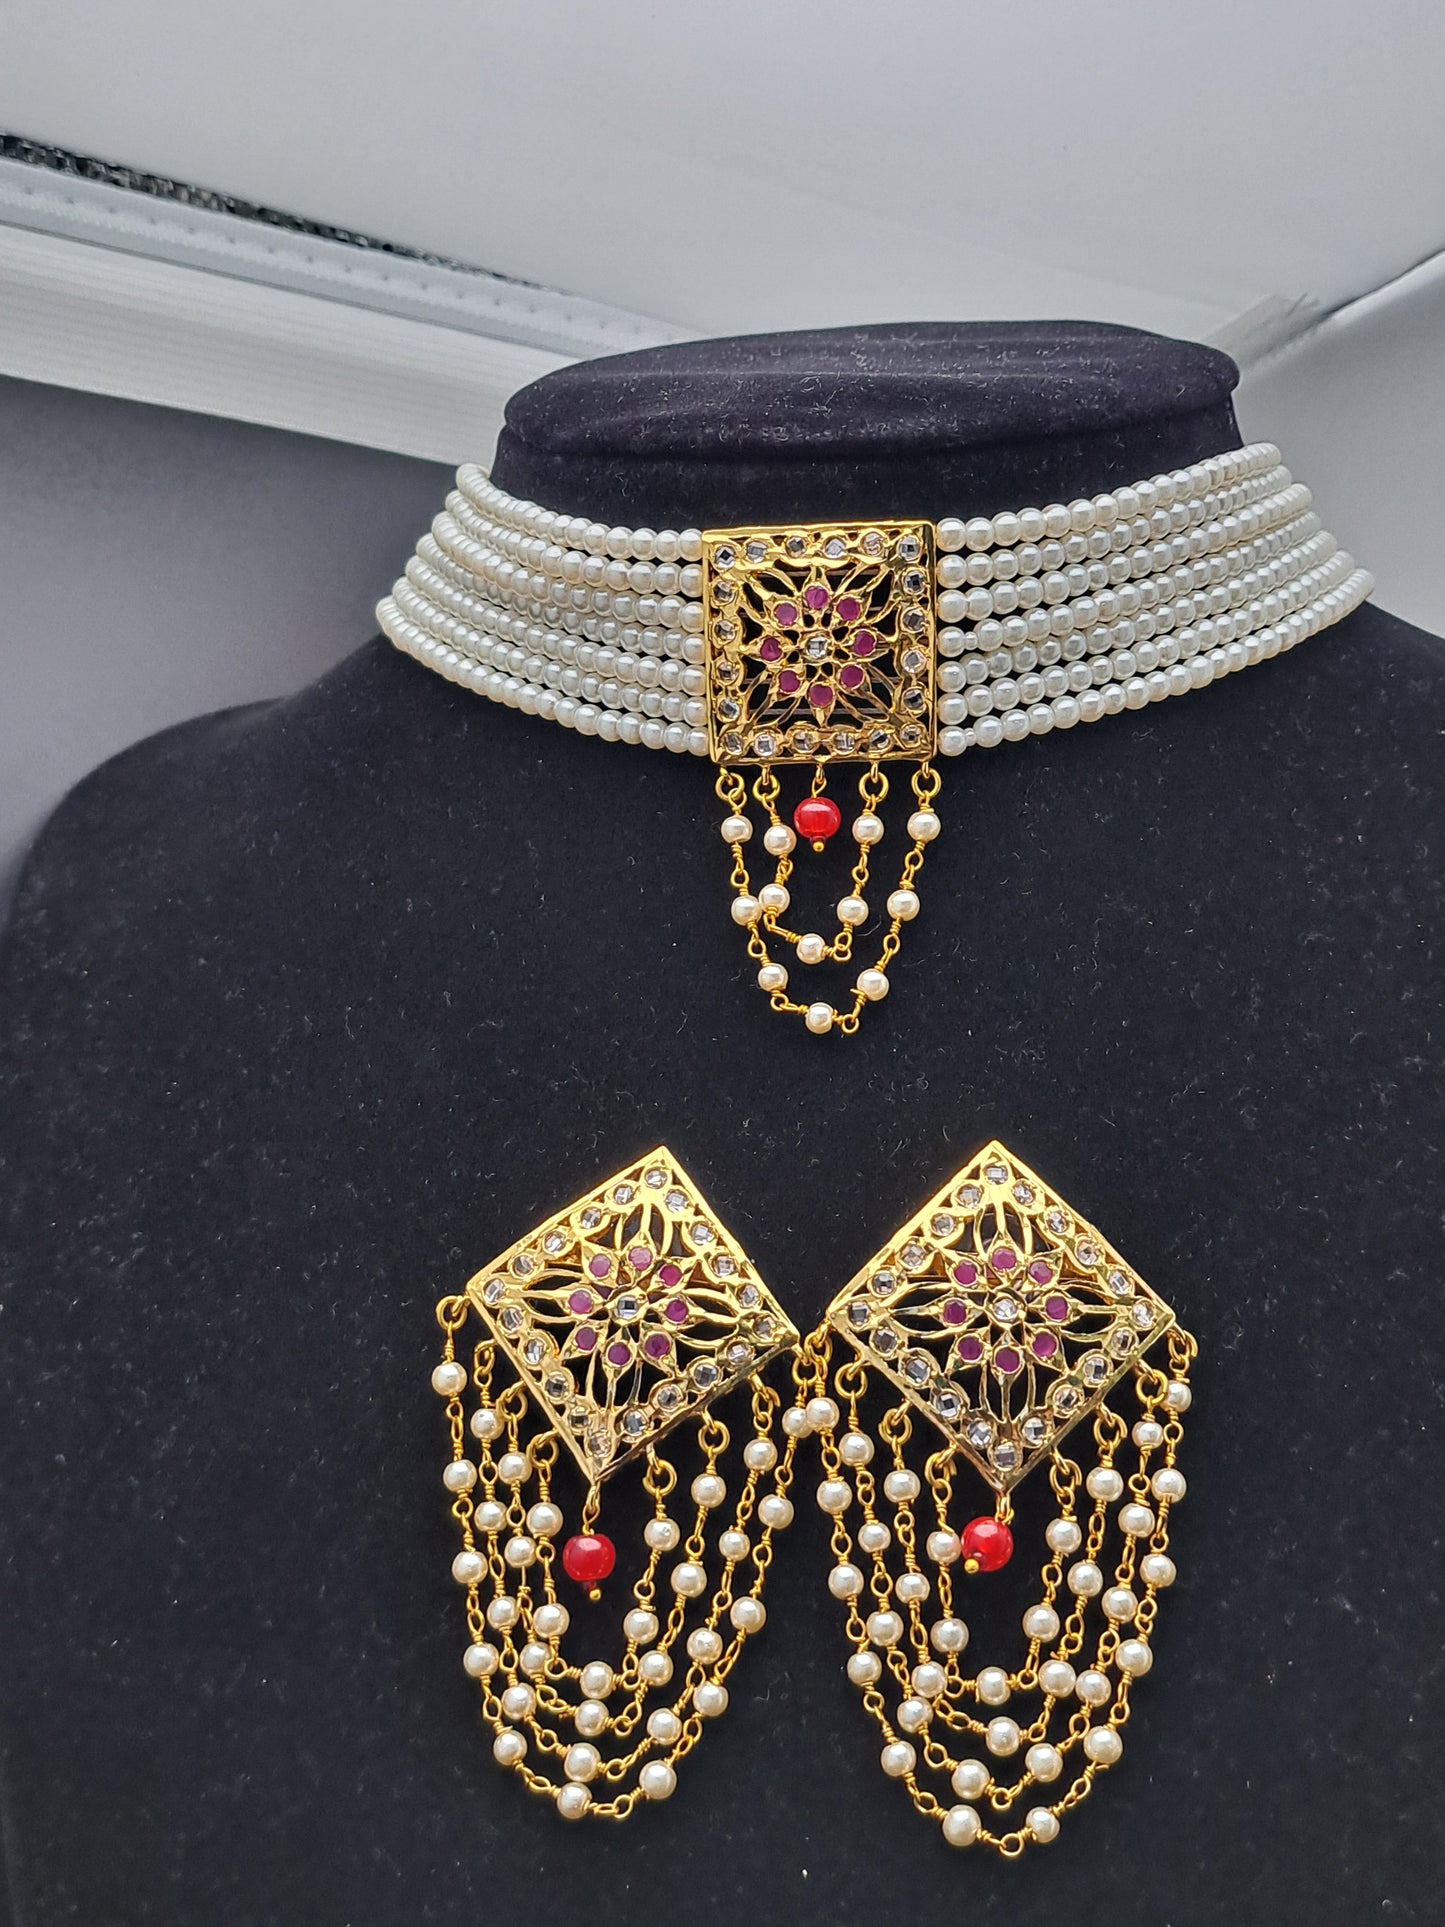 Hyderabadi pearl neckit choker with pearl chain drops